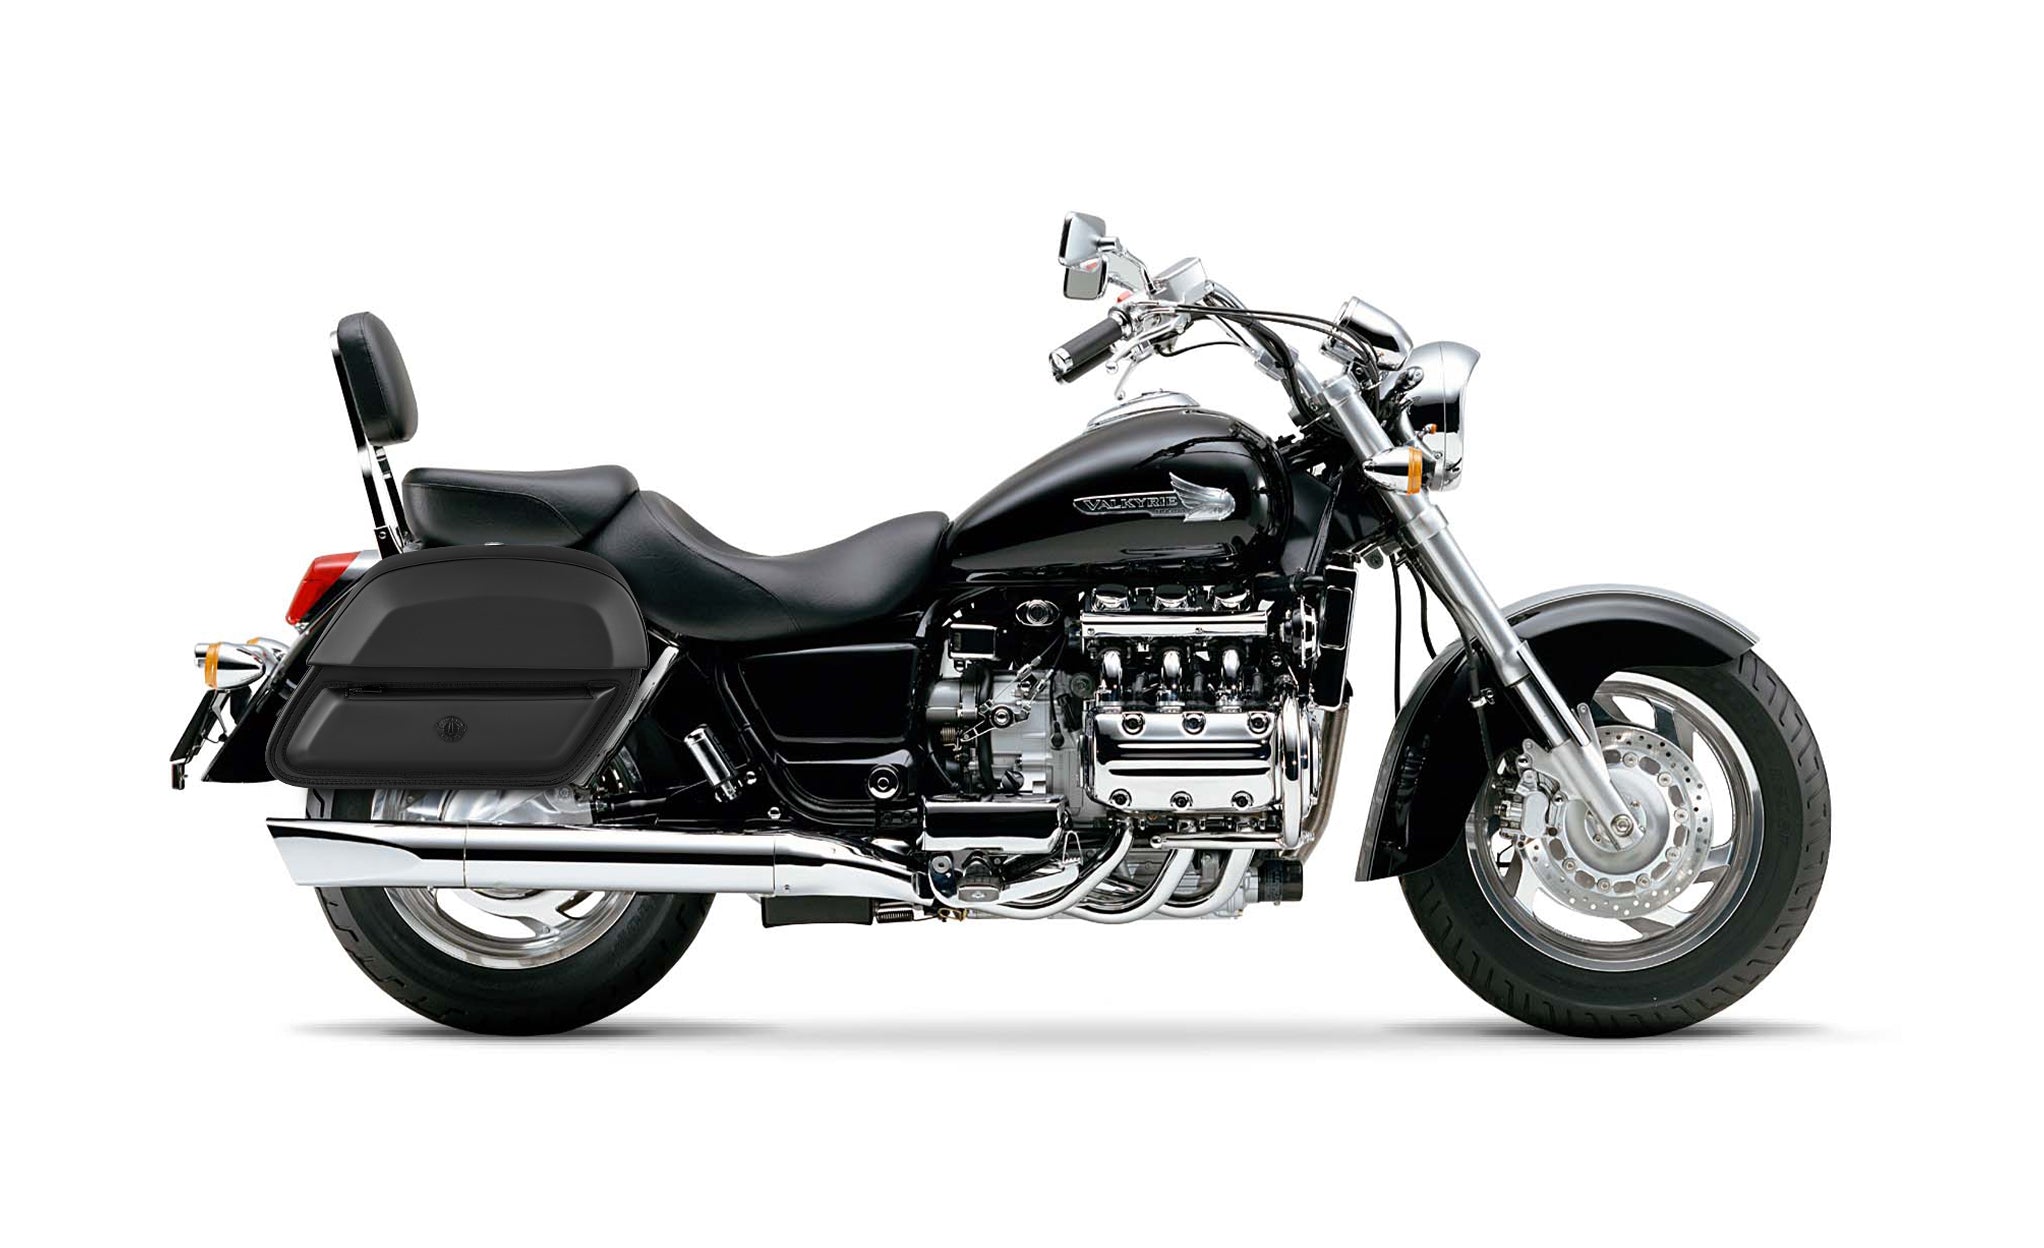 28L - Wraith Medium Honda Valkyrie 1500 Standard Leather Motorcycle Saddlebags BAG on Bike View @expand